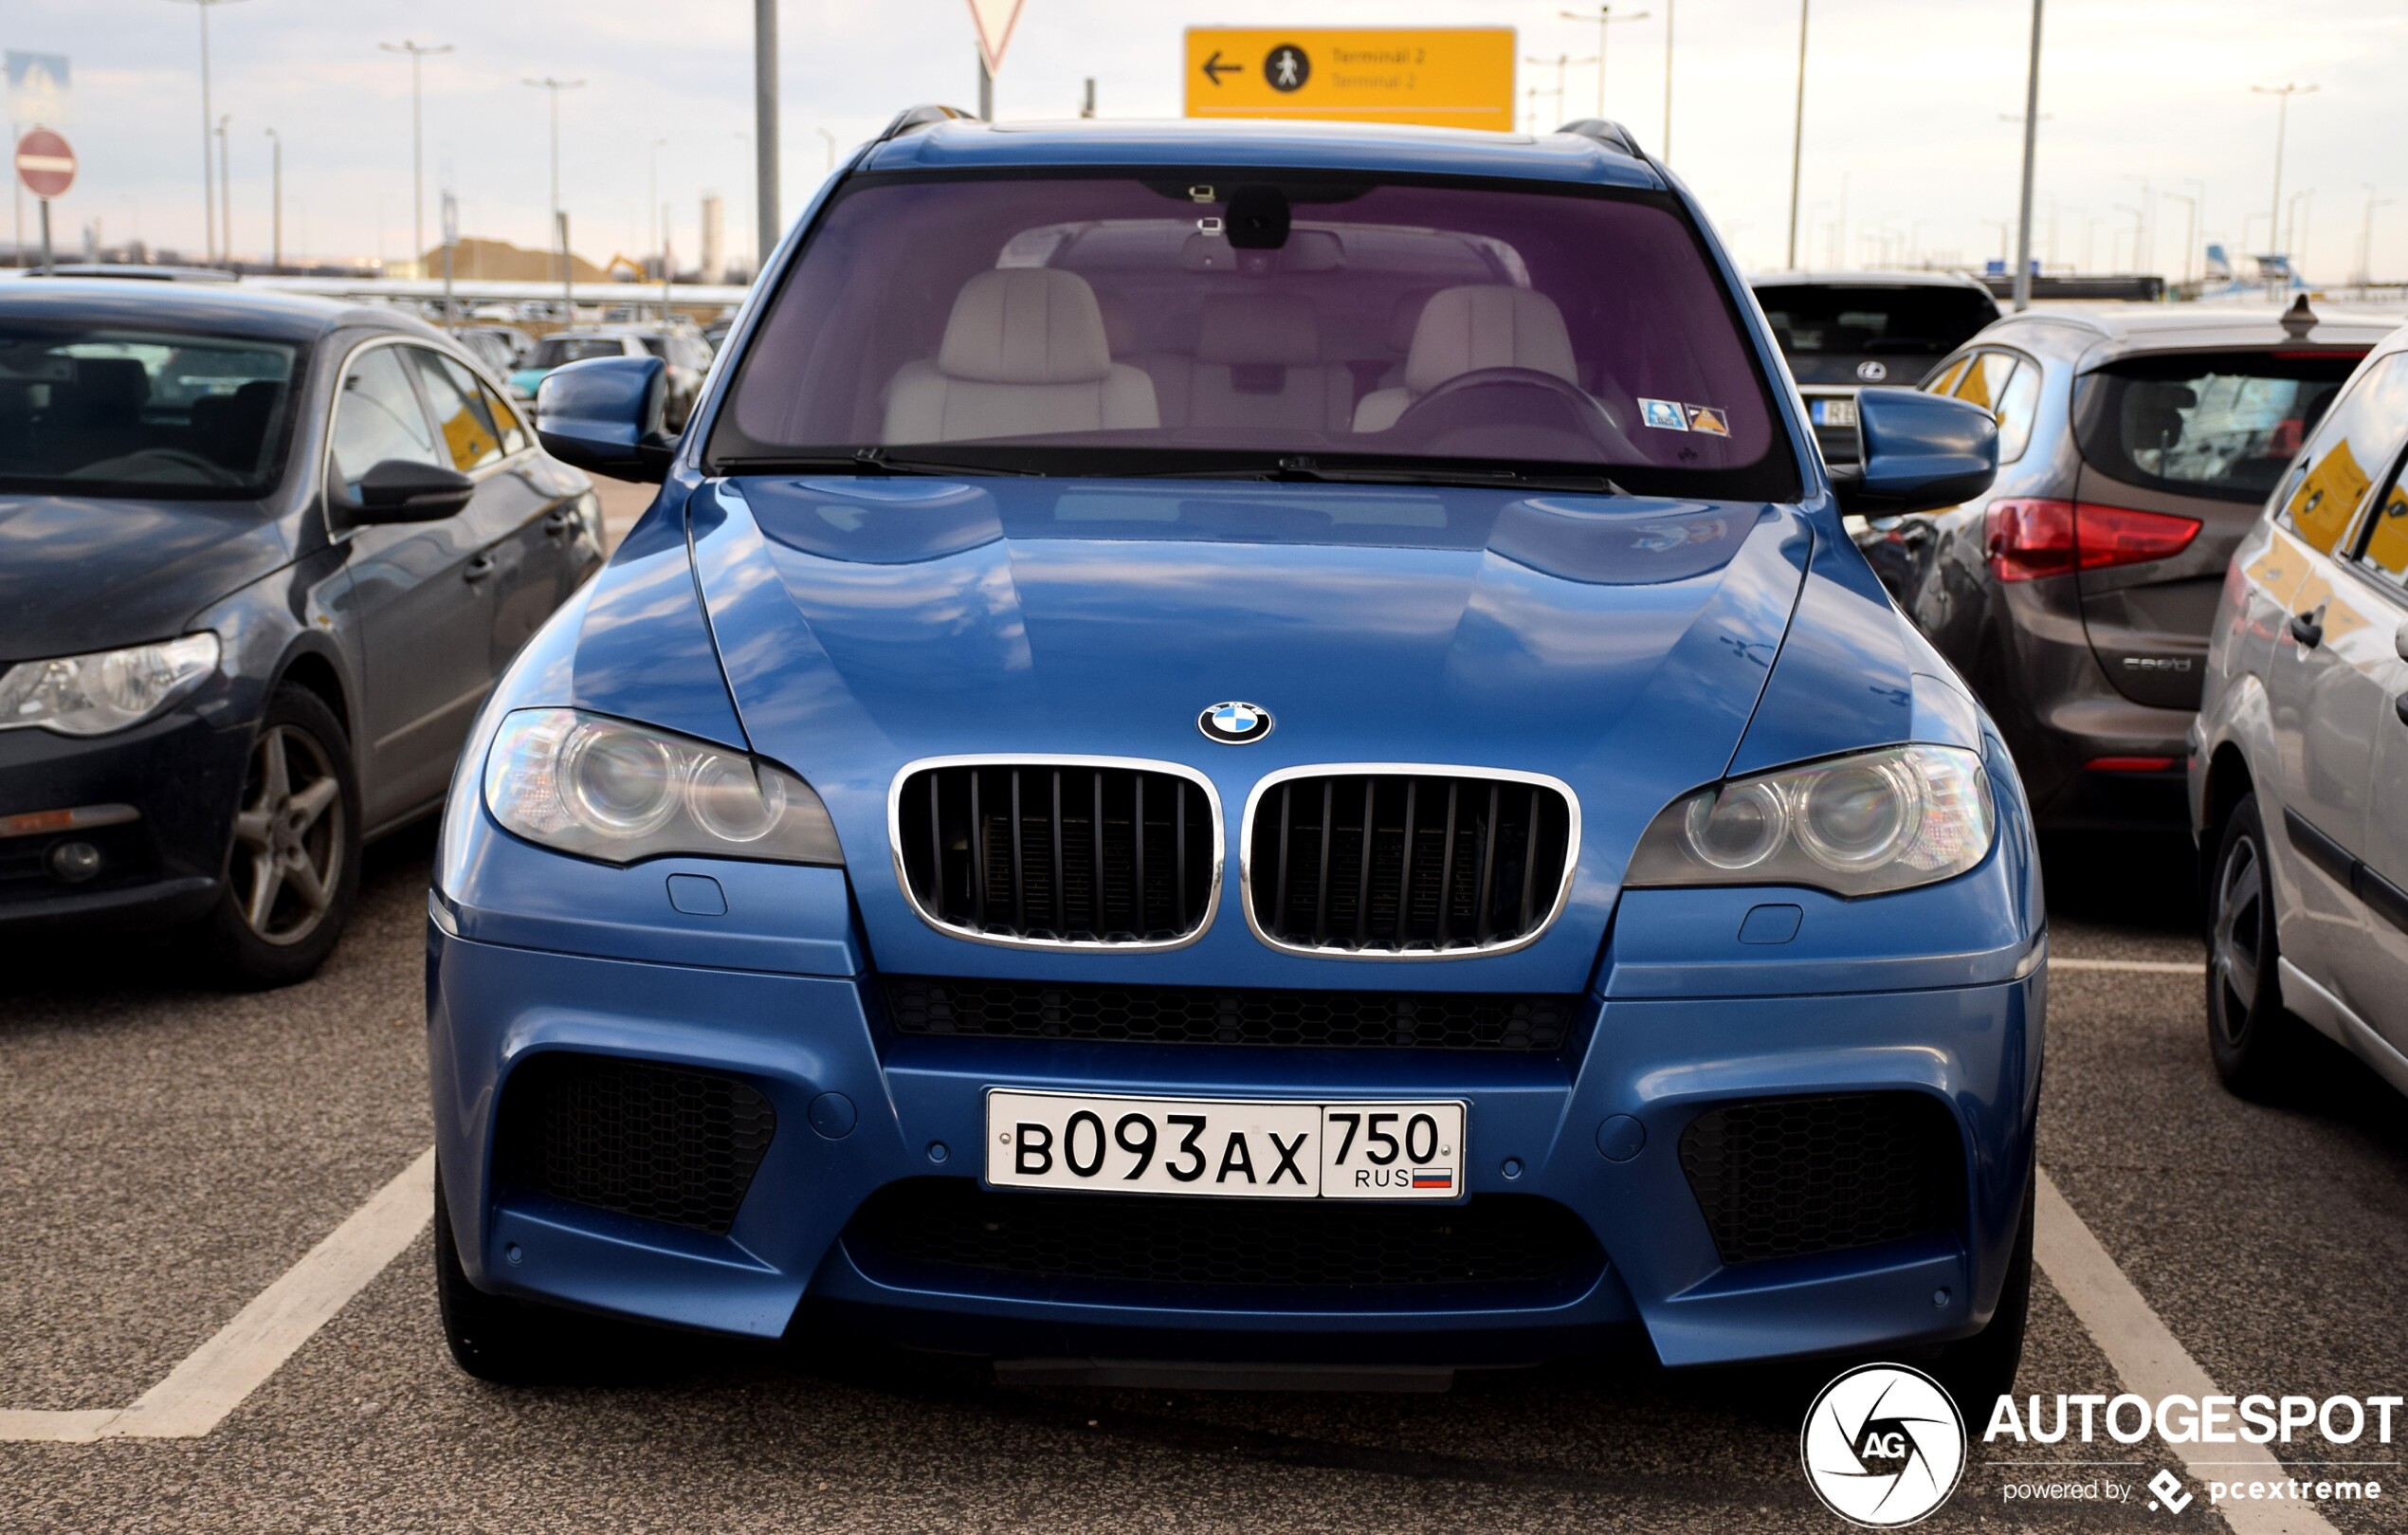 BMW X5 M E70 - 27 February 2020 - Autogespot